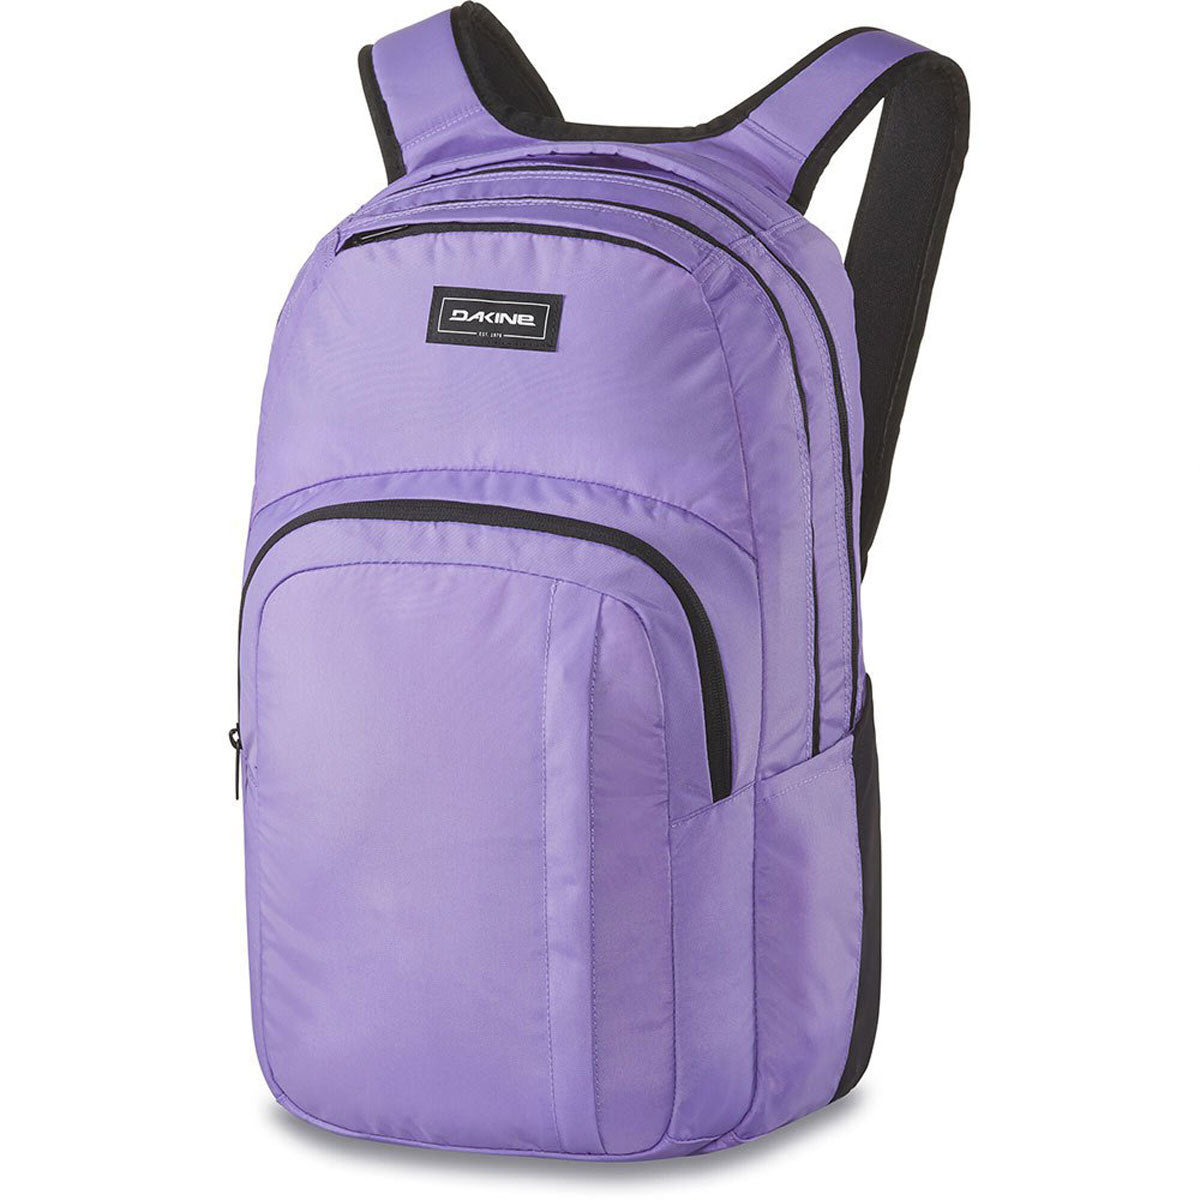 Zuiver Elementair Voorkeur Dakine Campus L 33l Backpack - Violet – Daddies Board Shop